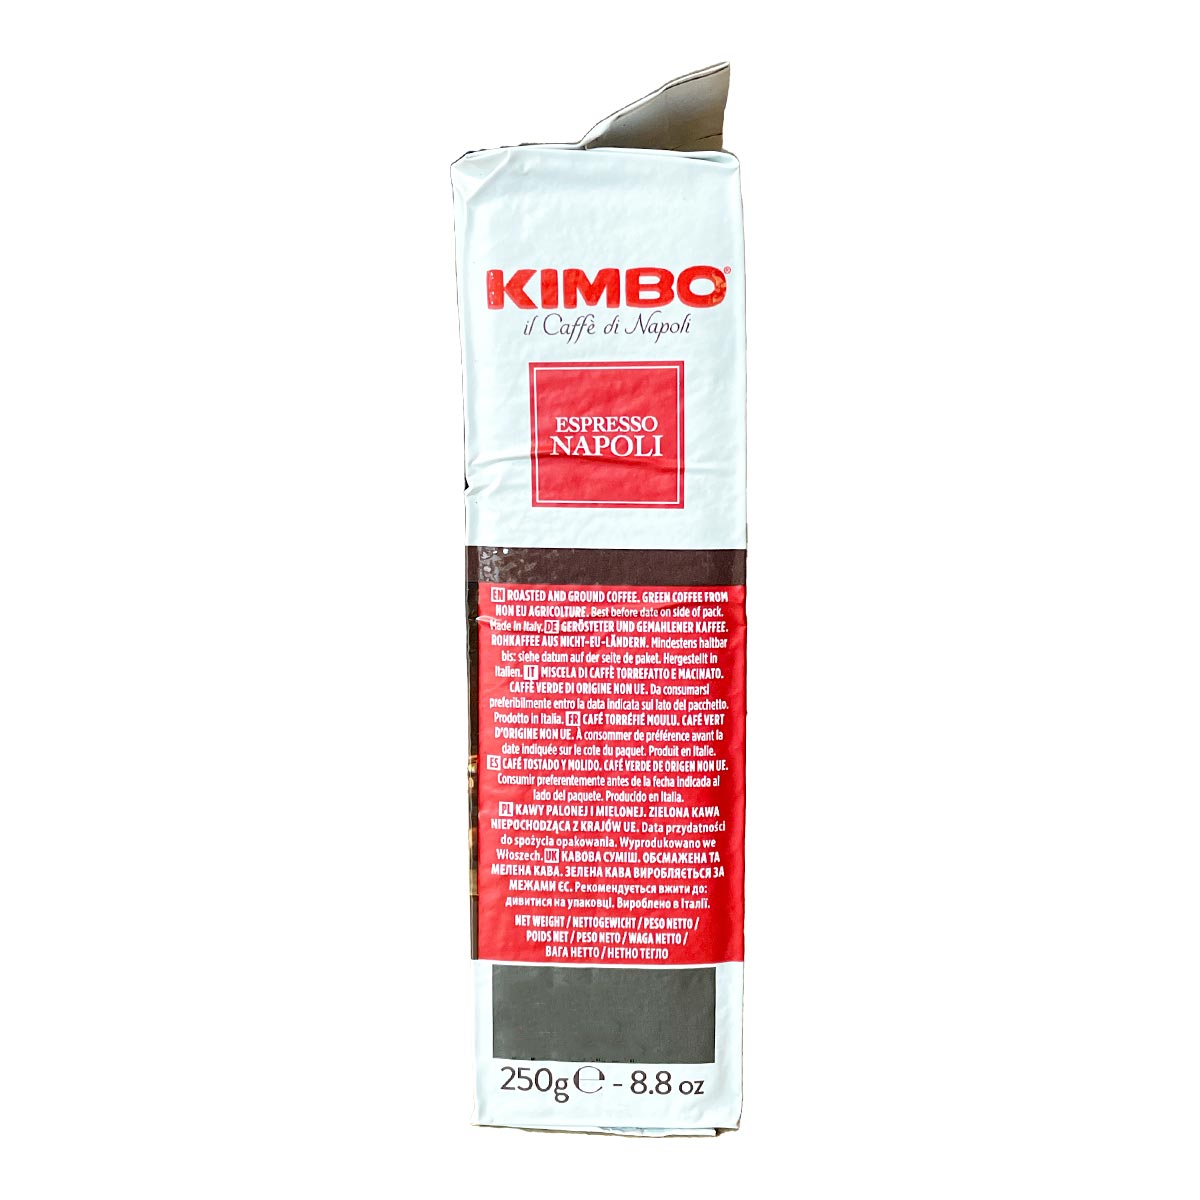 Kimbo-Espresso-Napoli-250g-rechts